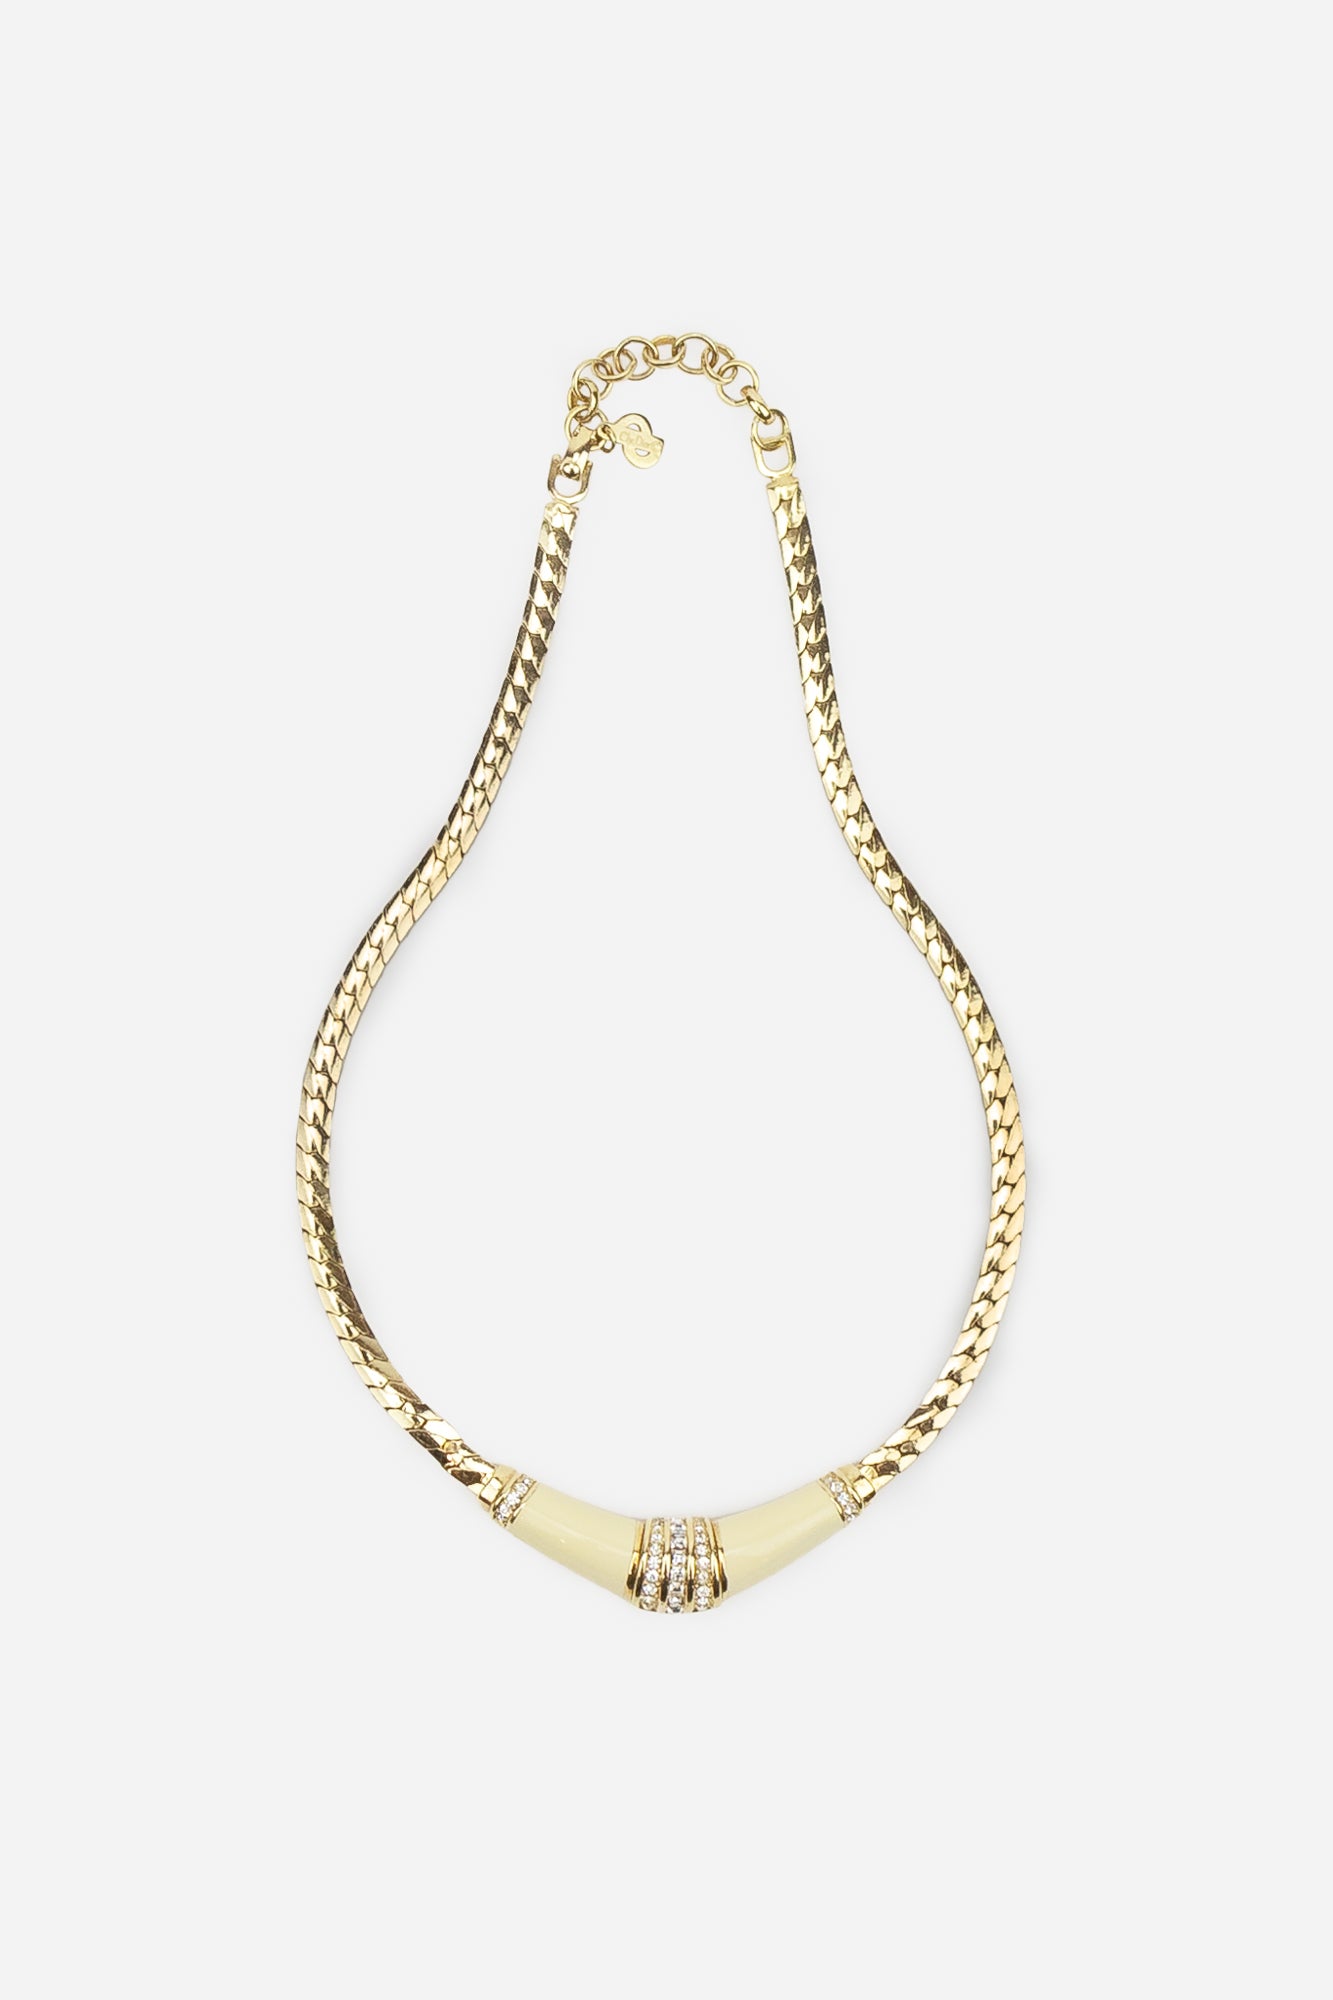 Vintage 1980's Gold Tone Choker Necklace